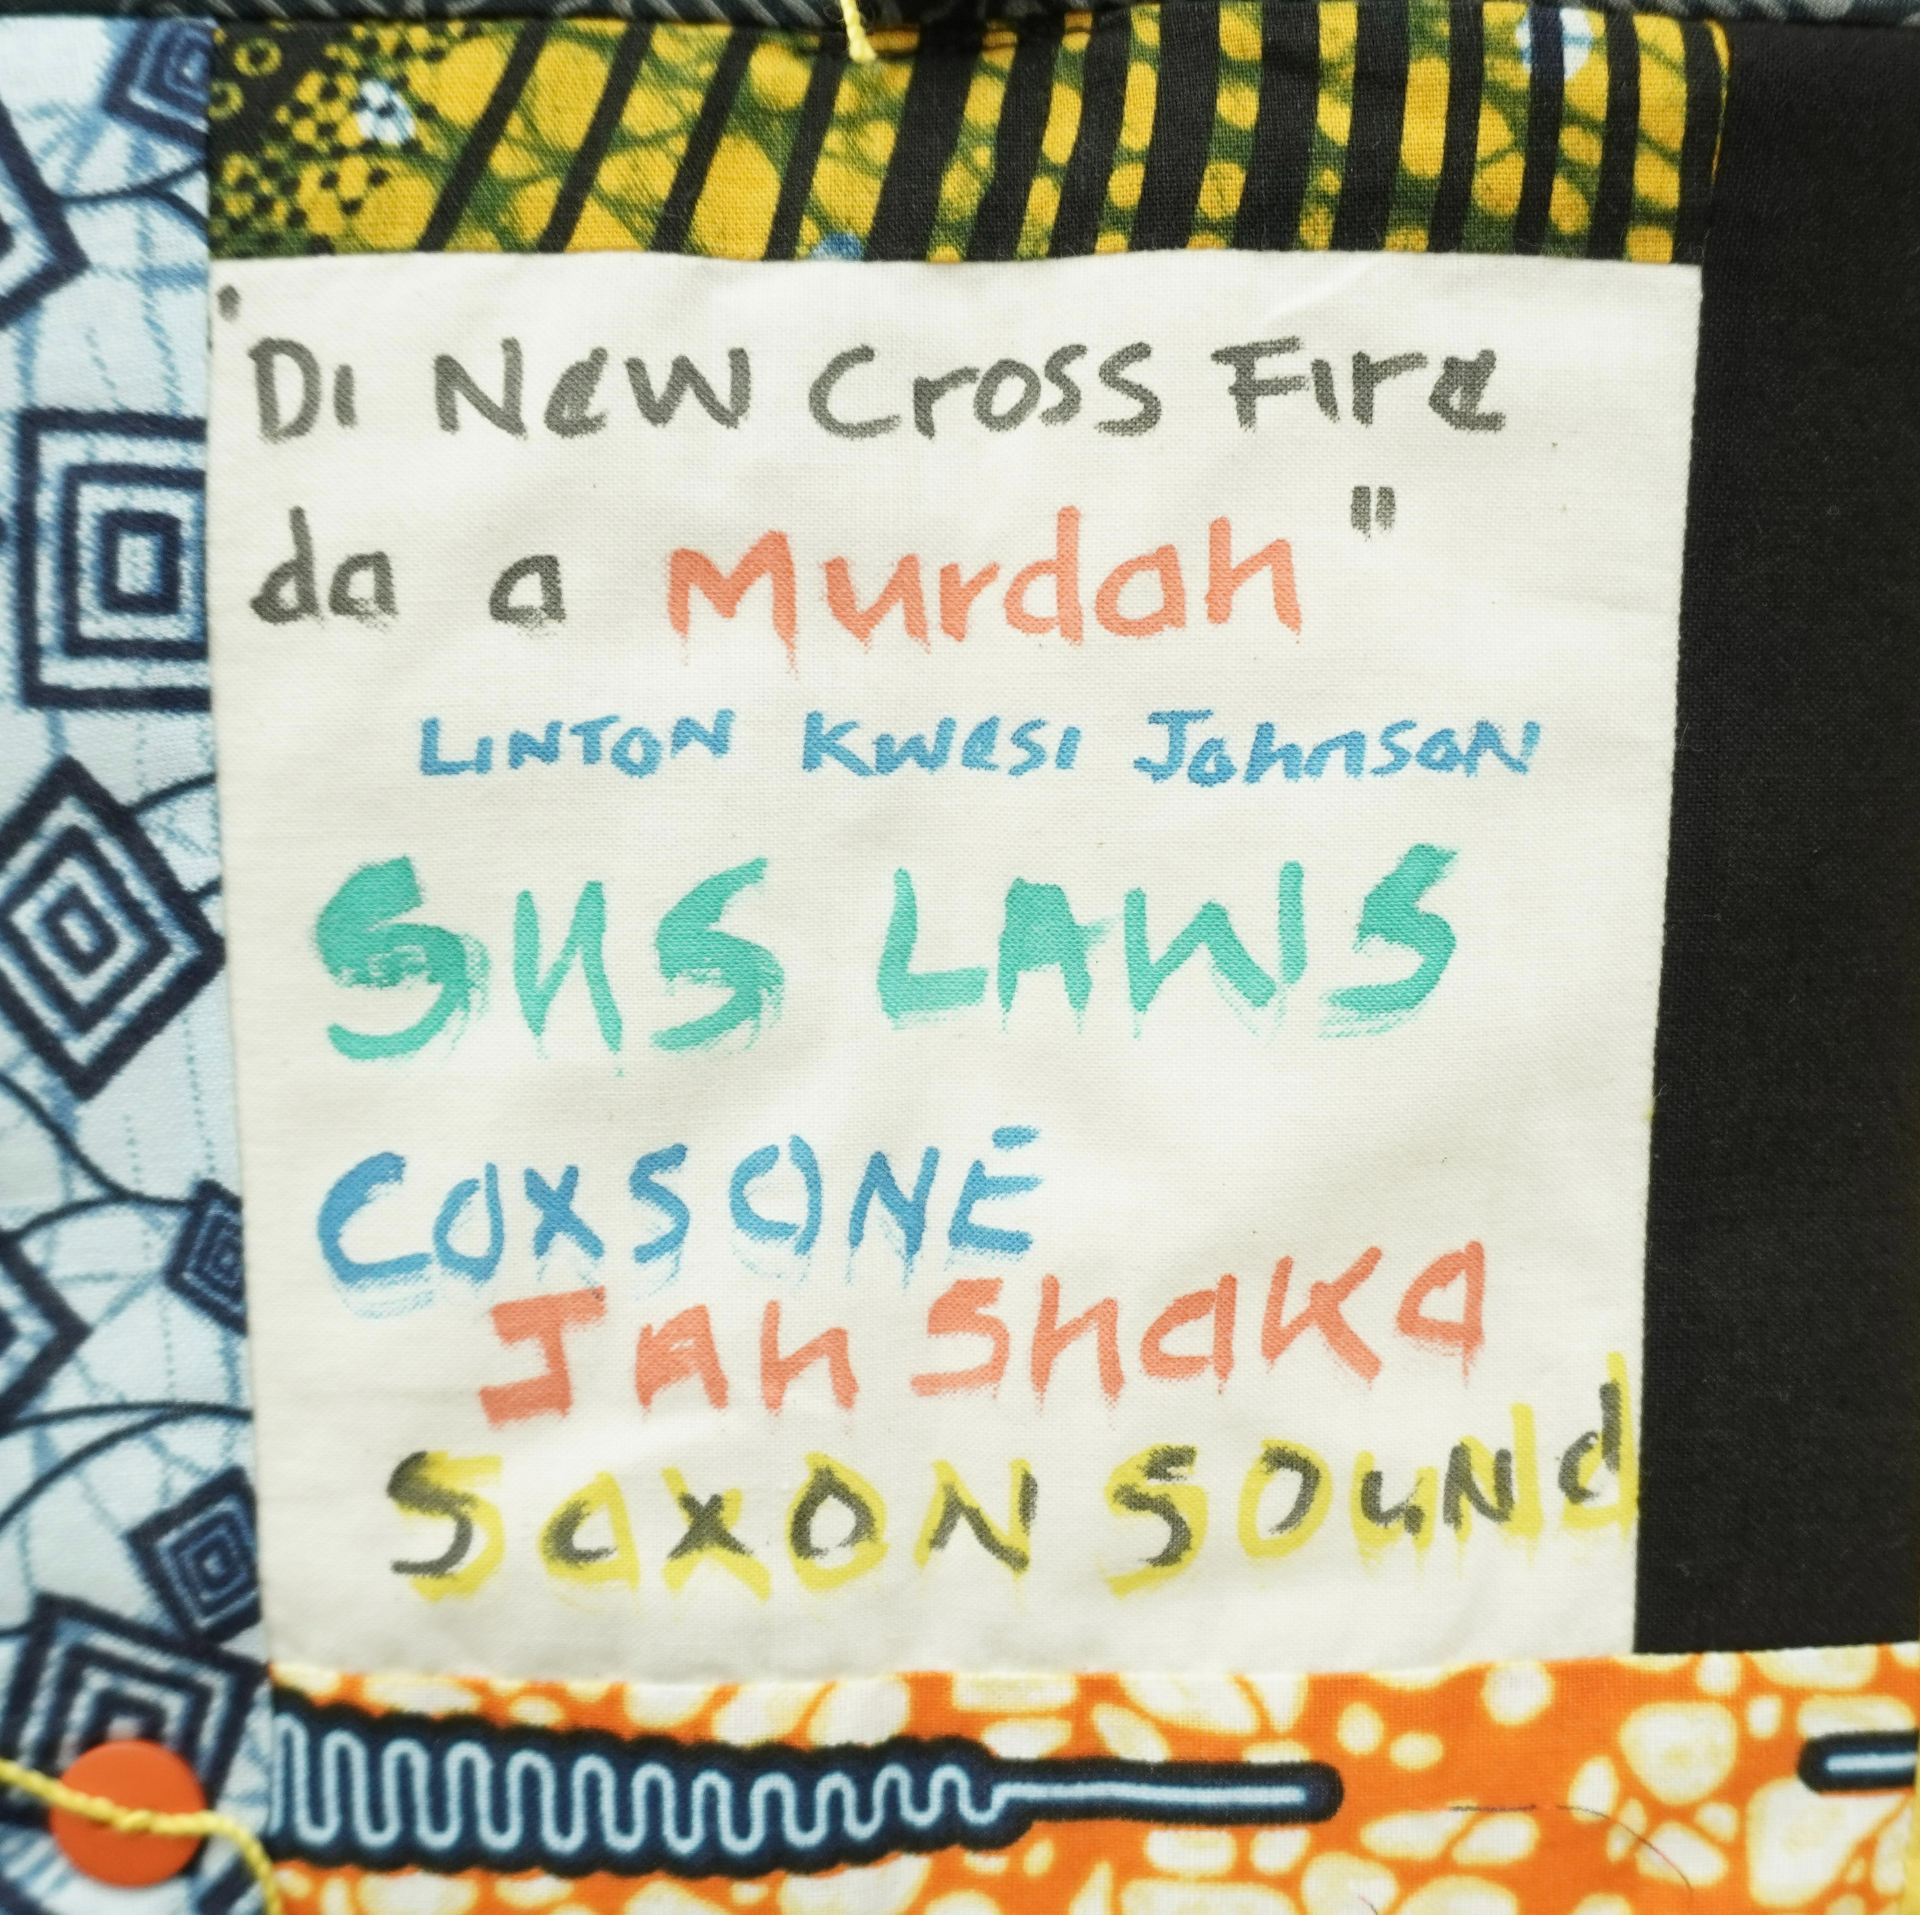 Commemorative quilt. Text reads, 'Di New Cross Fire da a murdah, Linton Kwesi Johnson, SNS Laws, Coxsone, Jah Shaka, Saxon Sound'